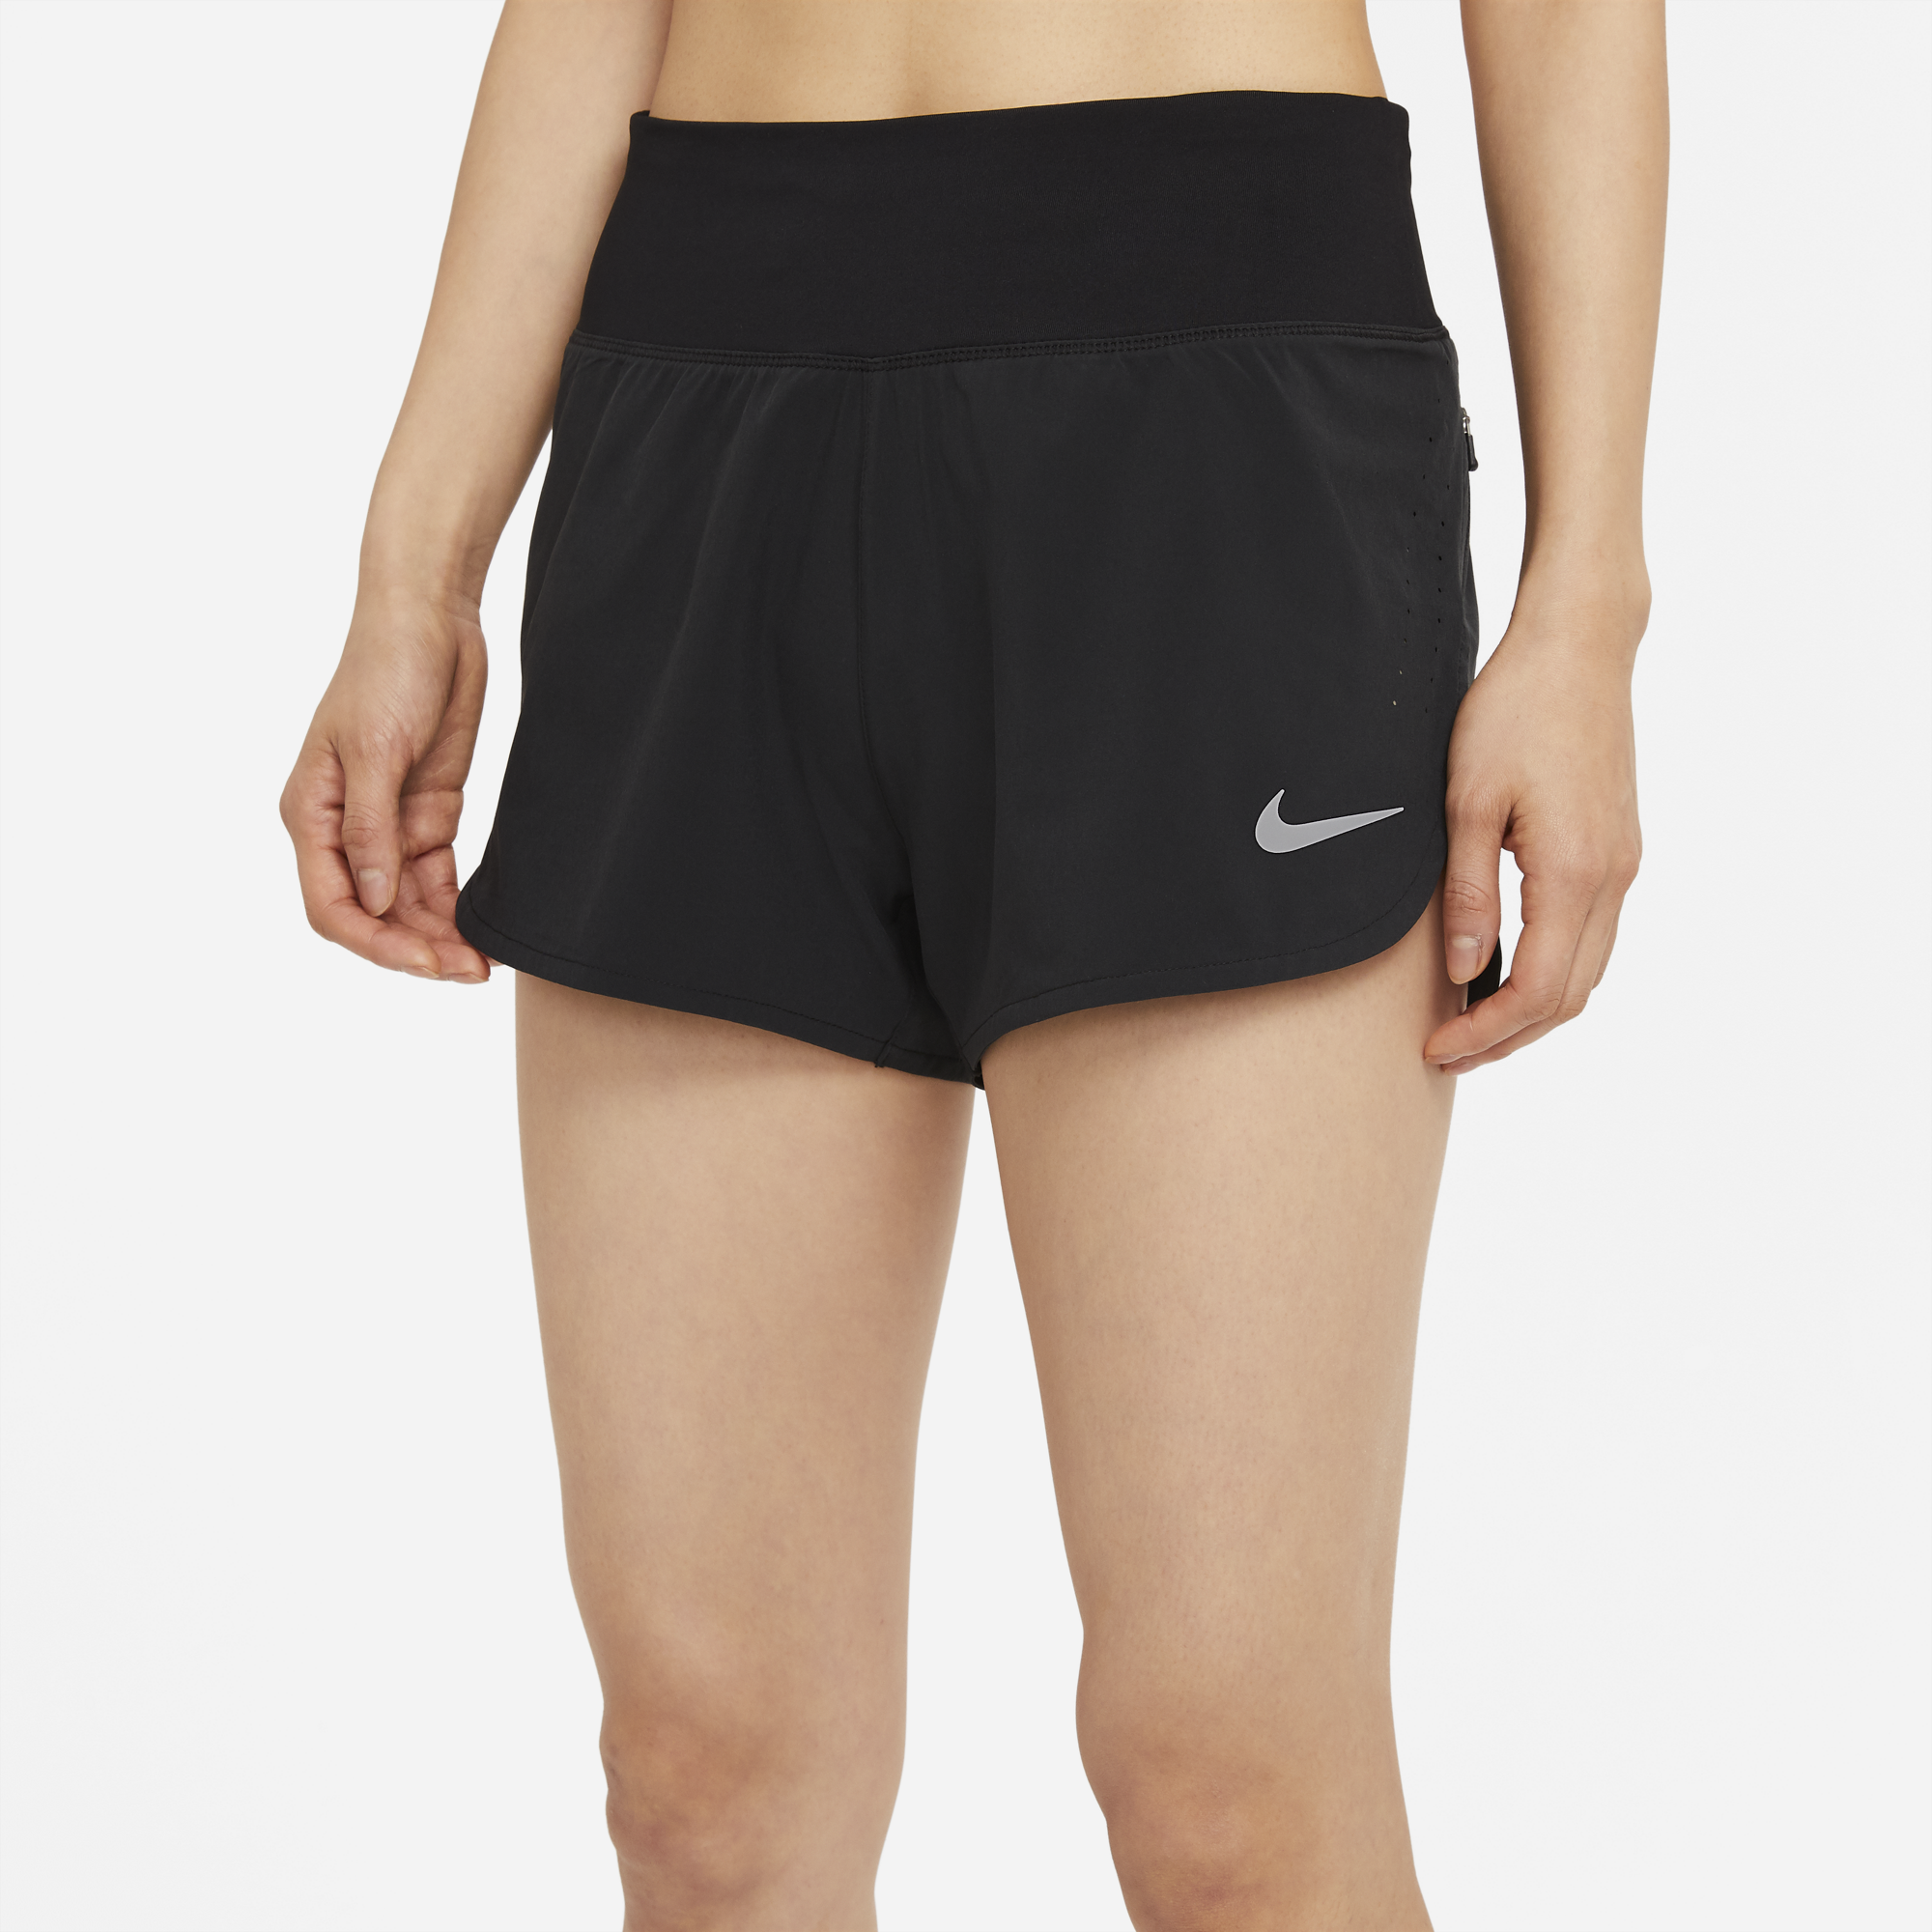 Nike Eclipse women's training shorts black CZ9570-010 